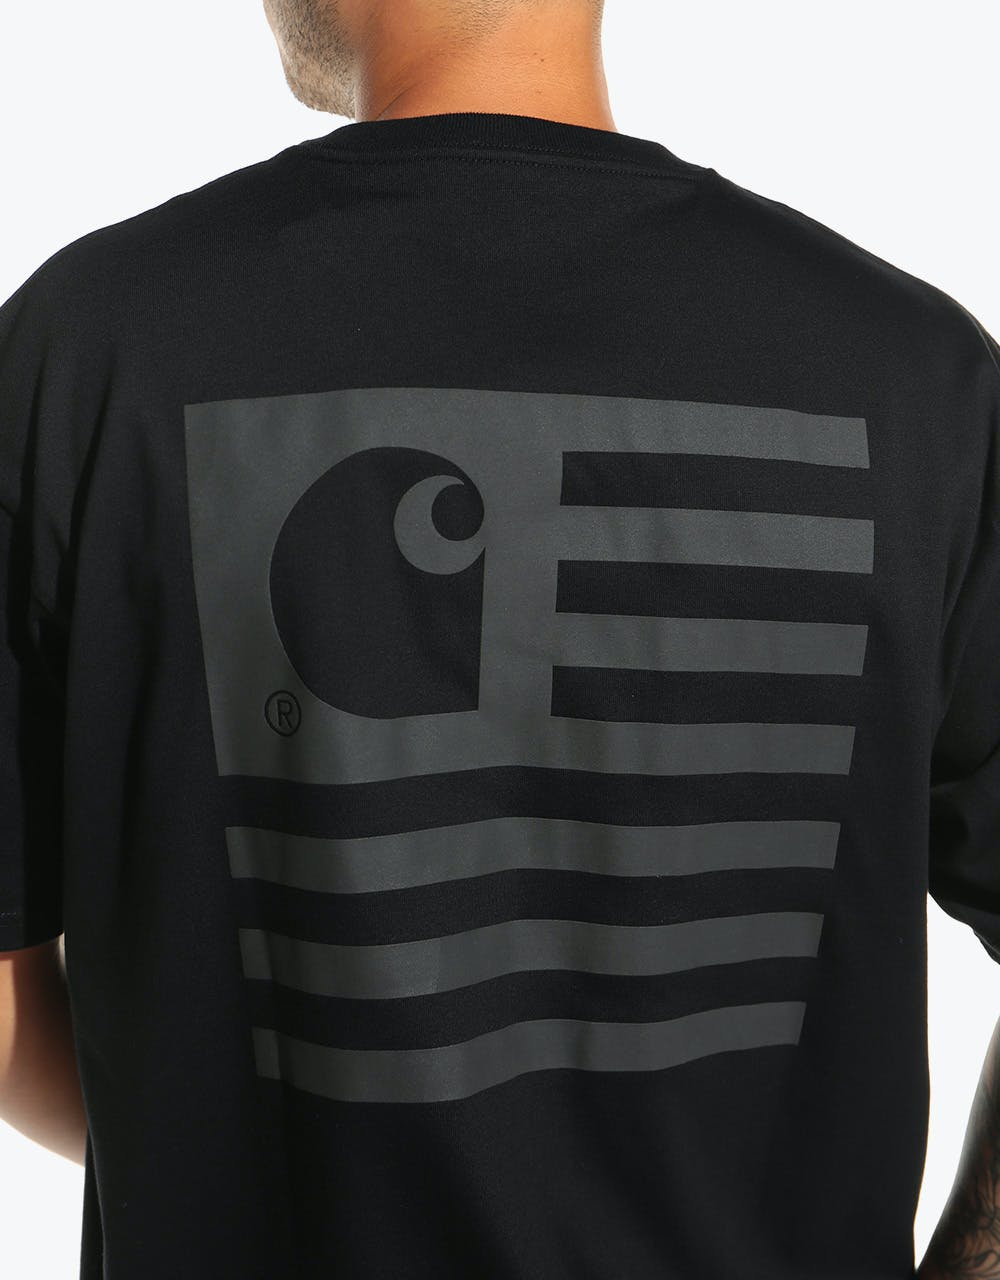 Carhartt WIP S/S State T-Shirt - Black/Black